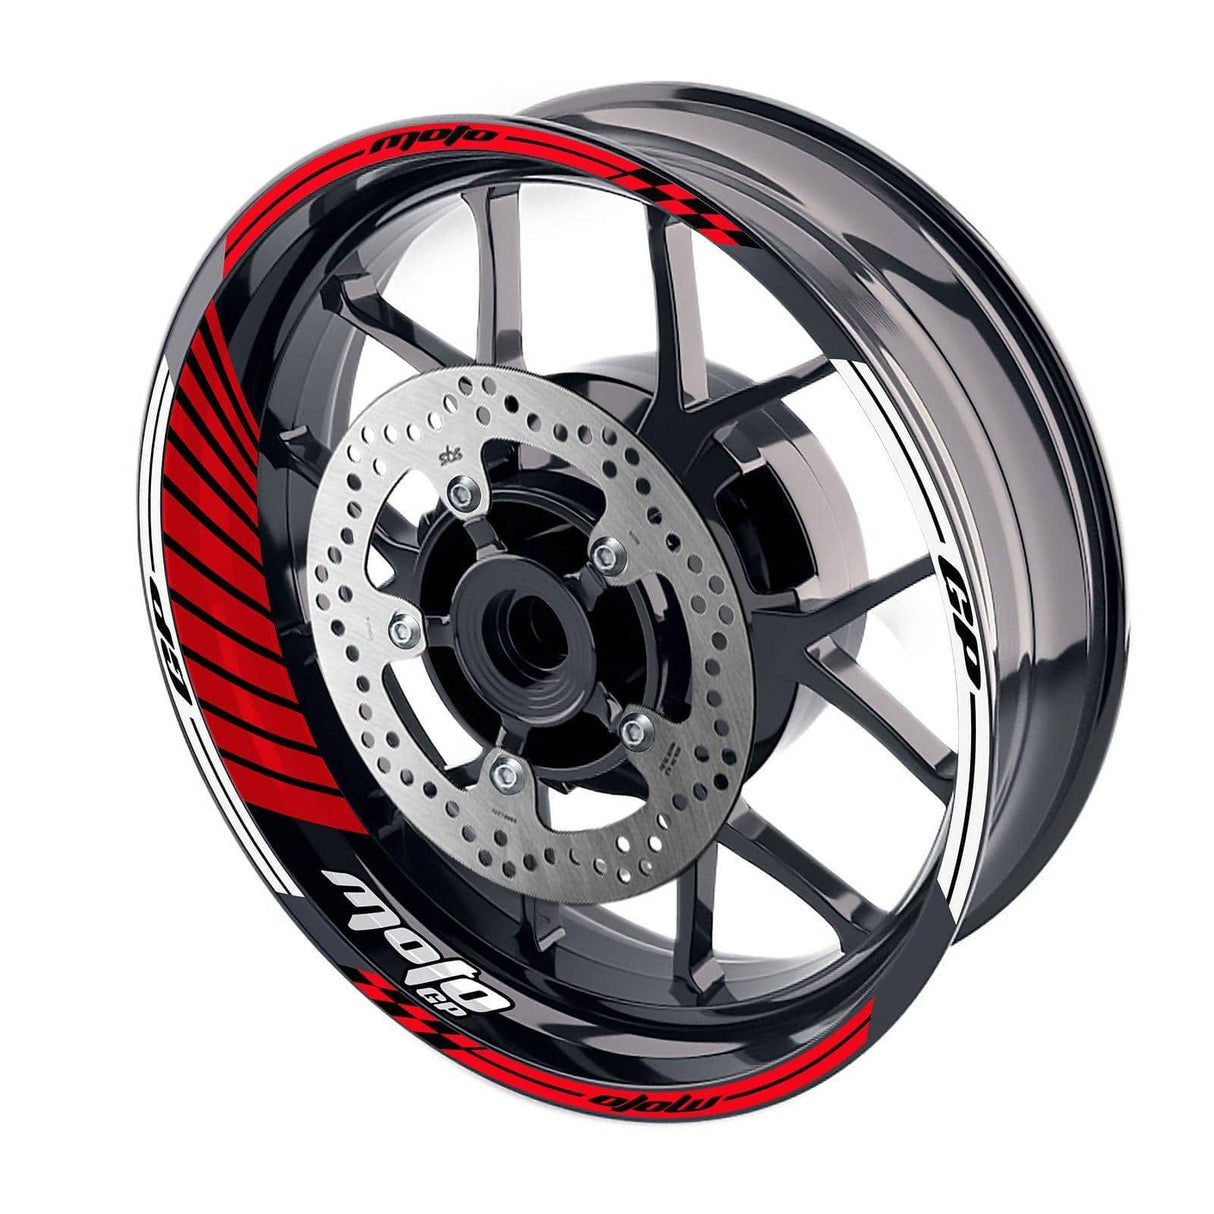 For Ducati 1299 Panigale Logo MOTO 17 inch Rim Wheel Stickers GP02 Stripes.